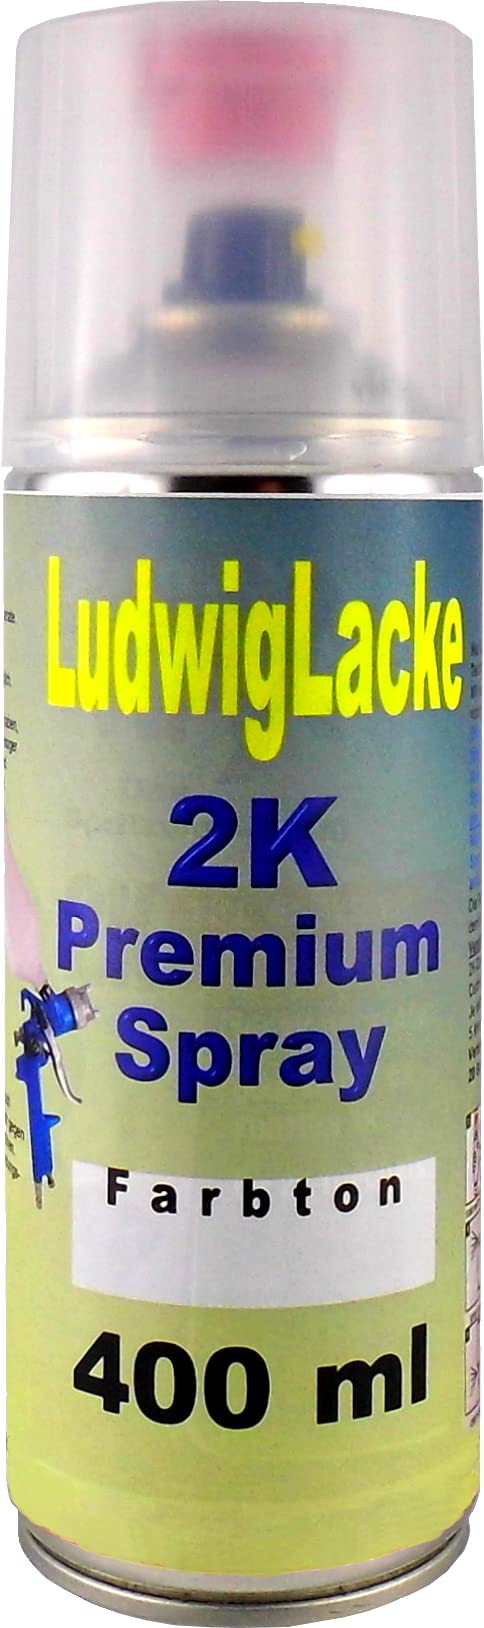 RAL 7013 BRAUNGRAU 2K Premium Spray SEIDENMATT 400ml von Ludwiglacke